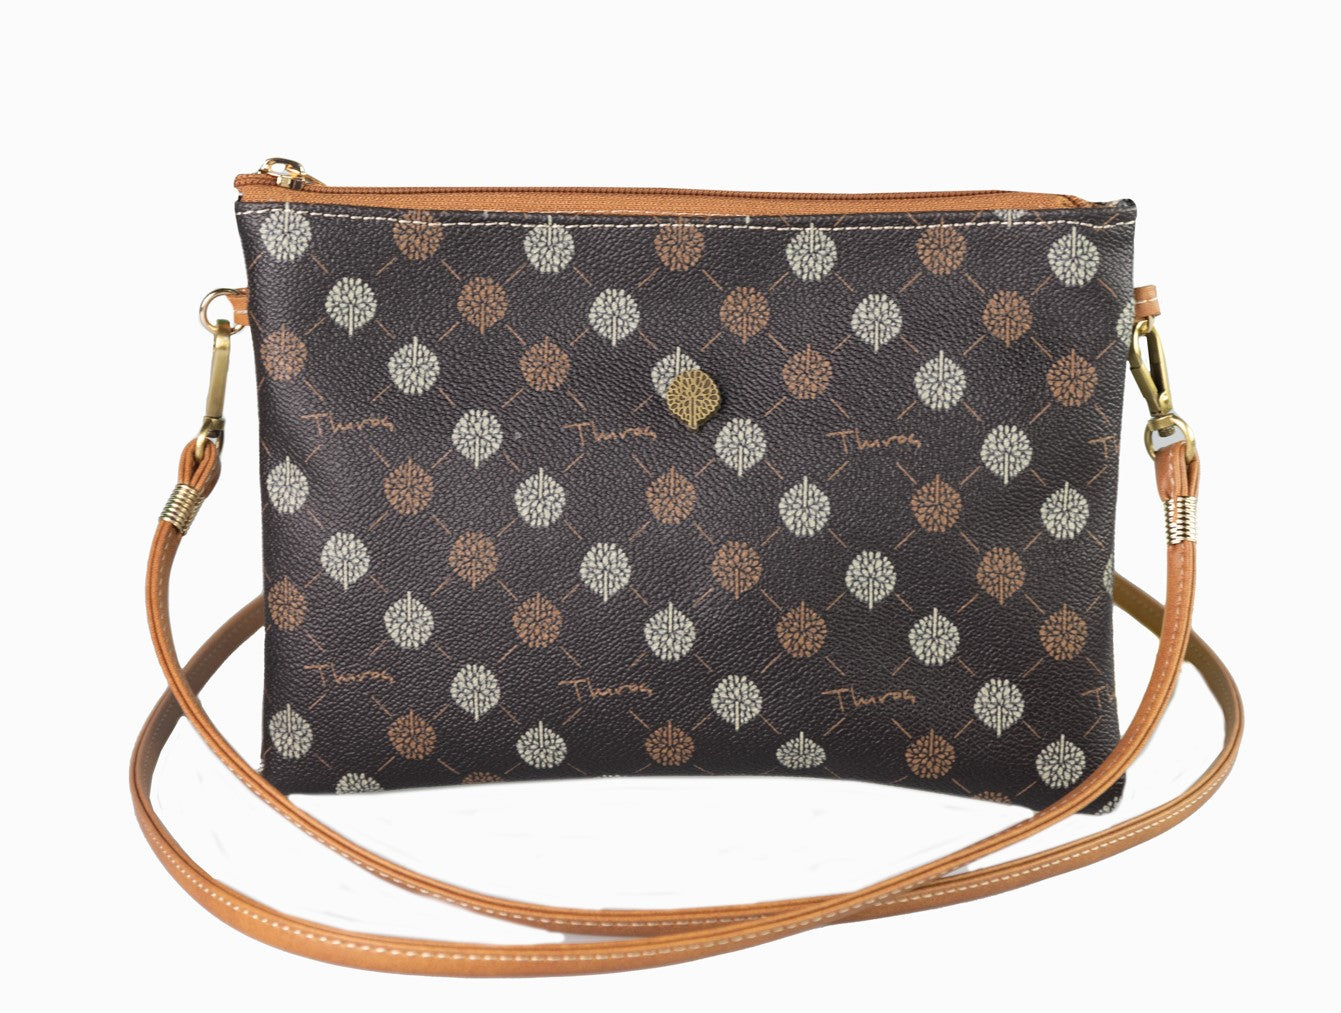 Olivia crossbody bag and handbag